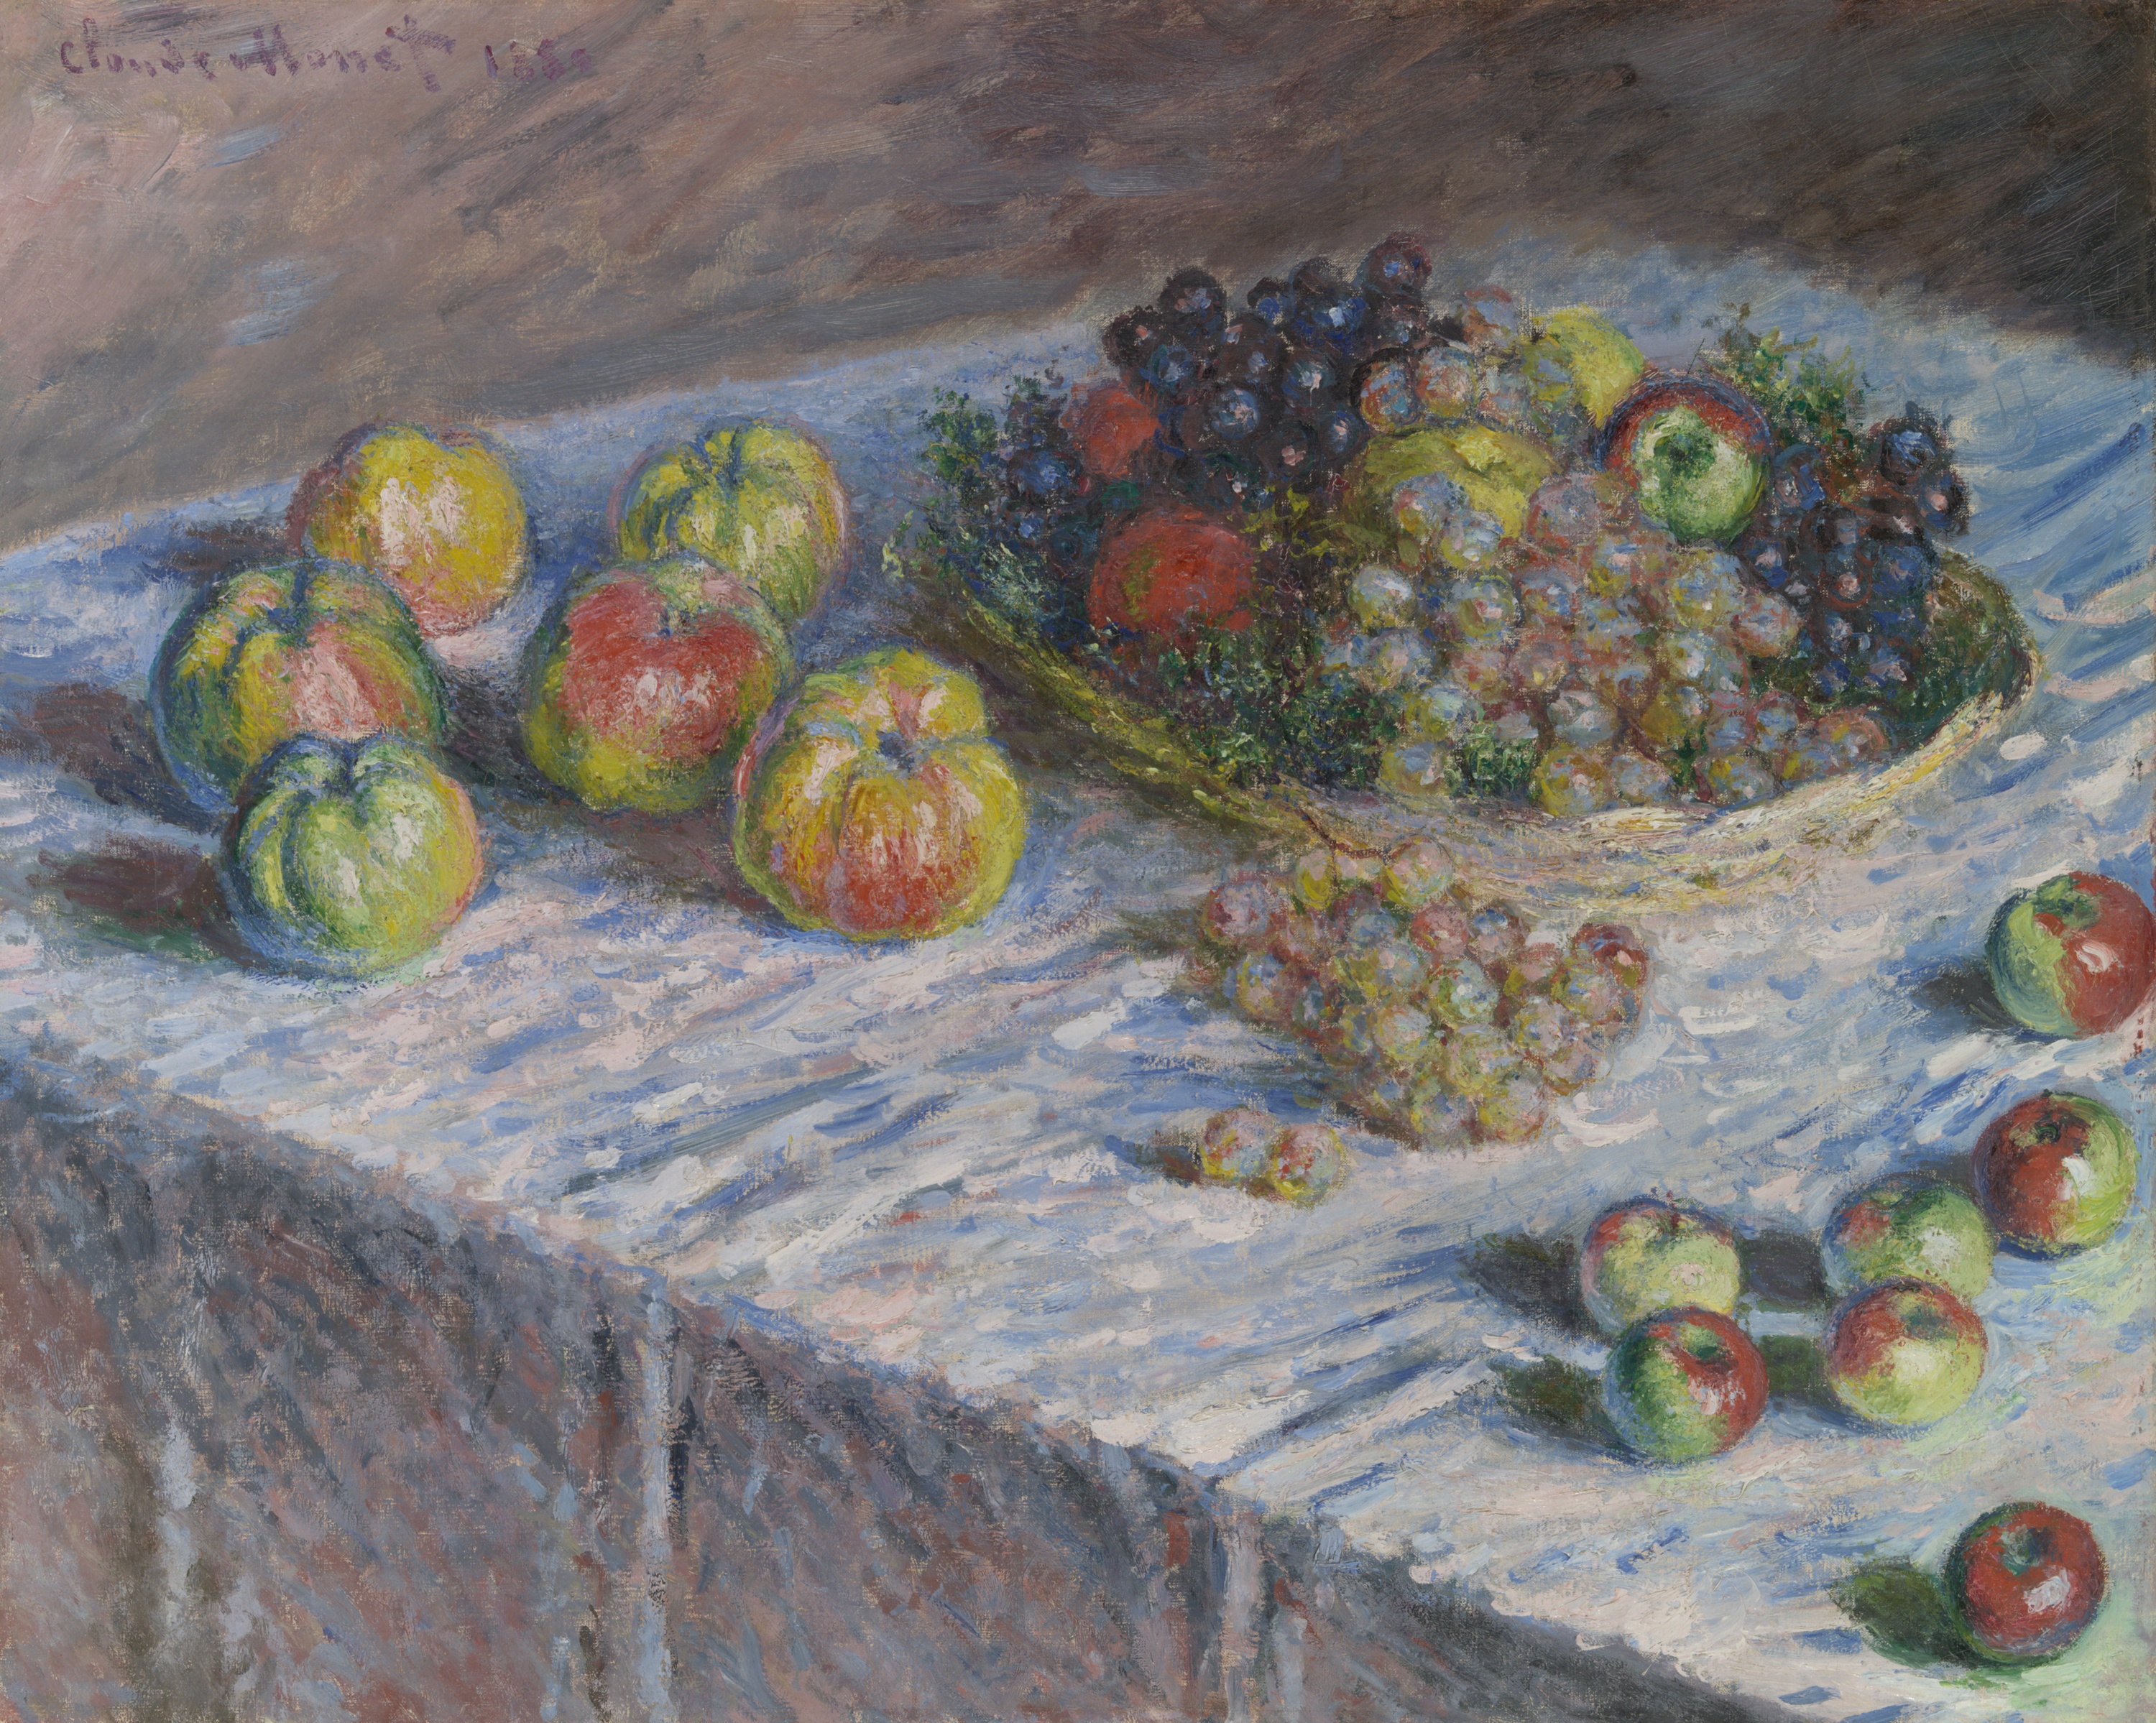 Mere și struguri by Claude Monet - 1880 - 66.5 × 82.5 cm 